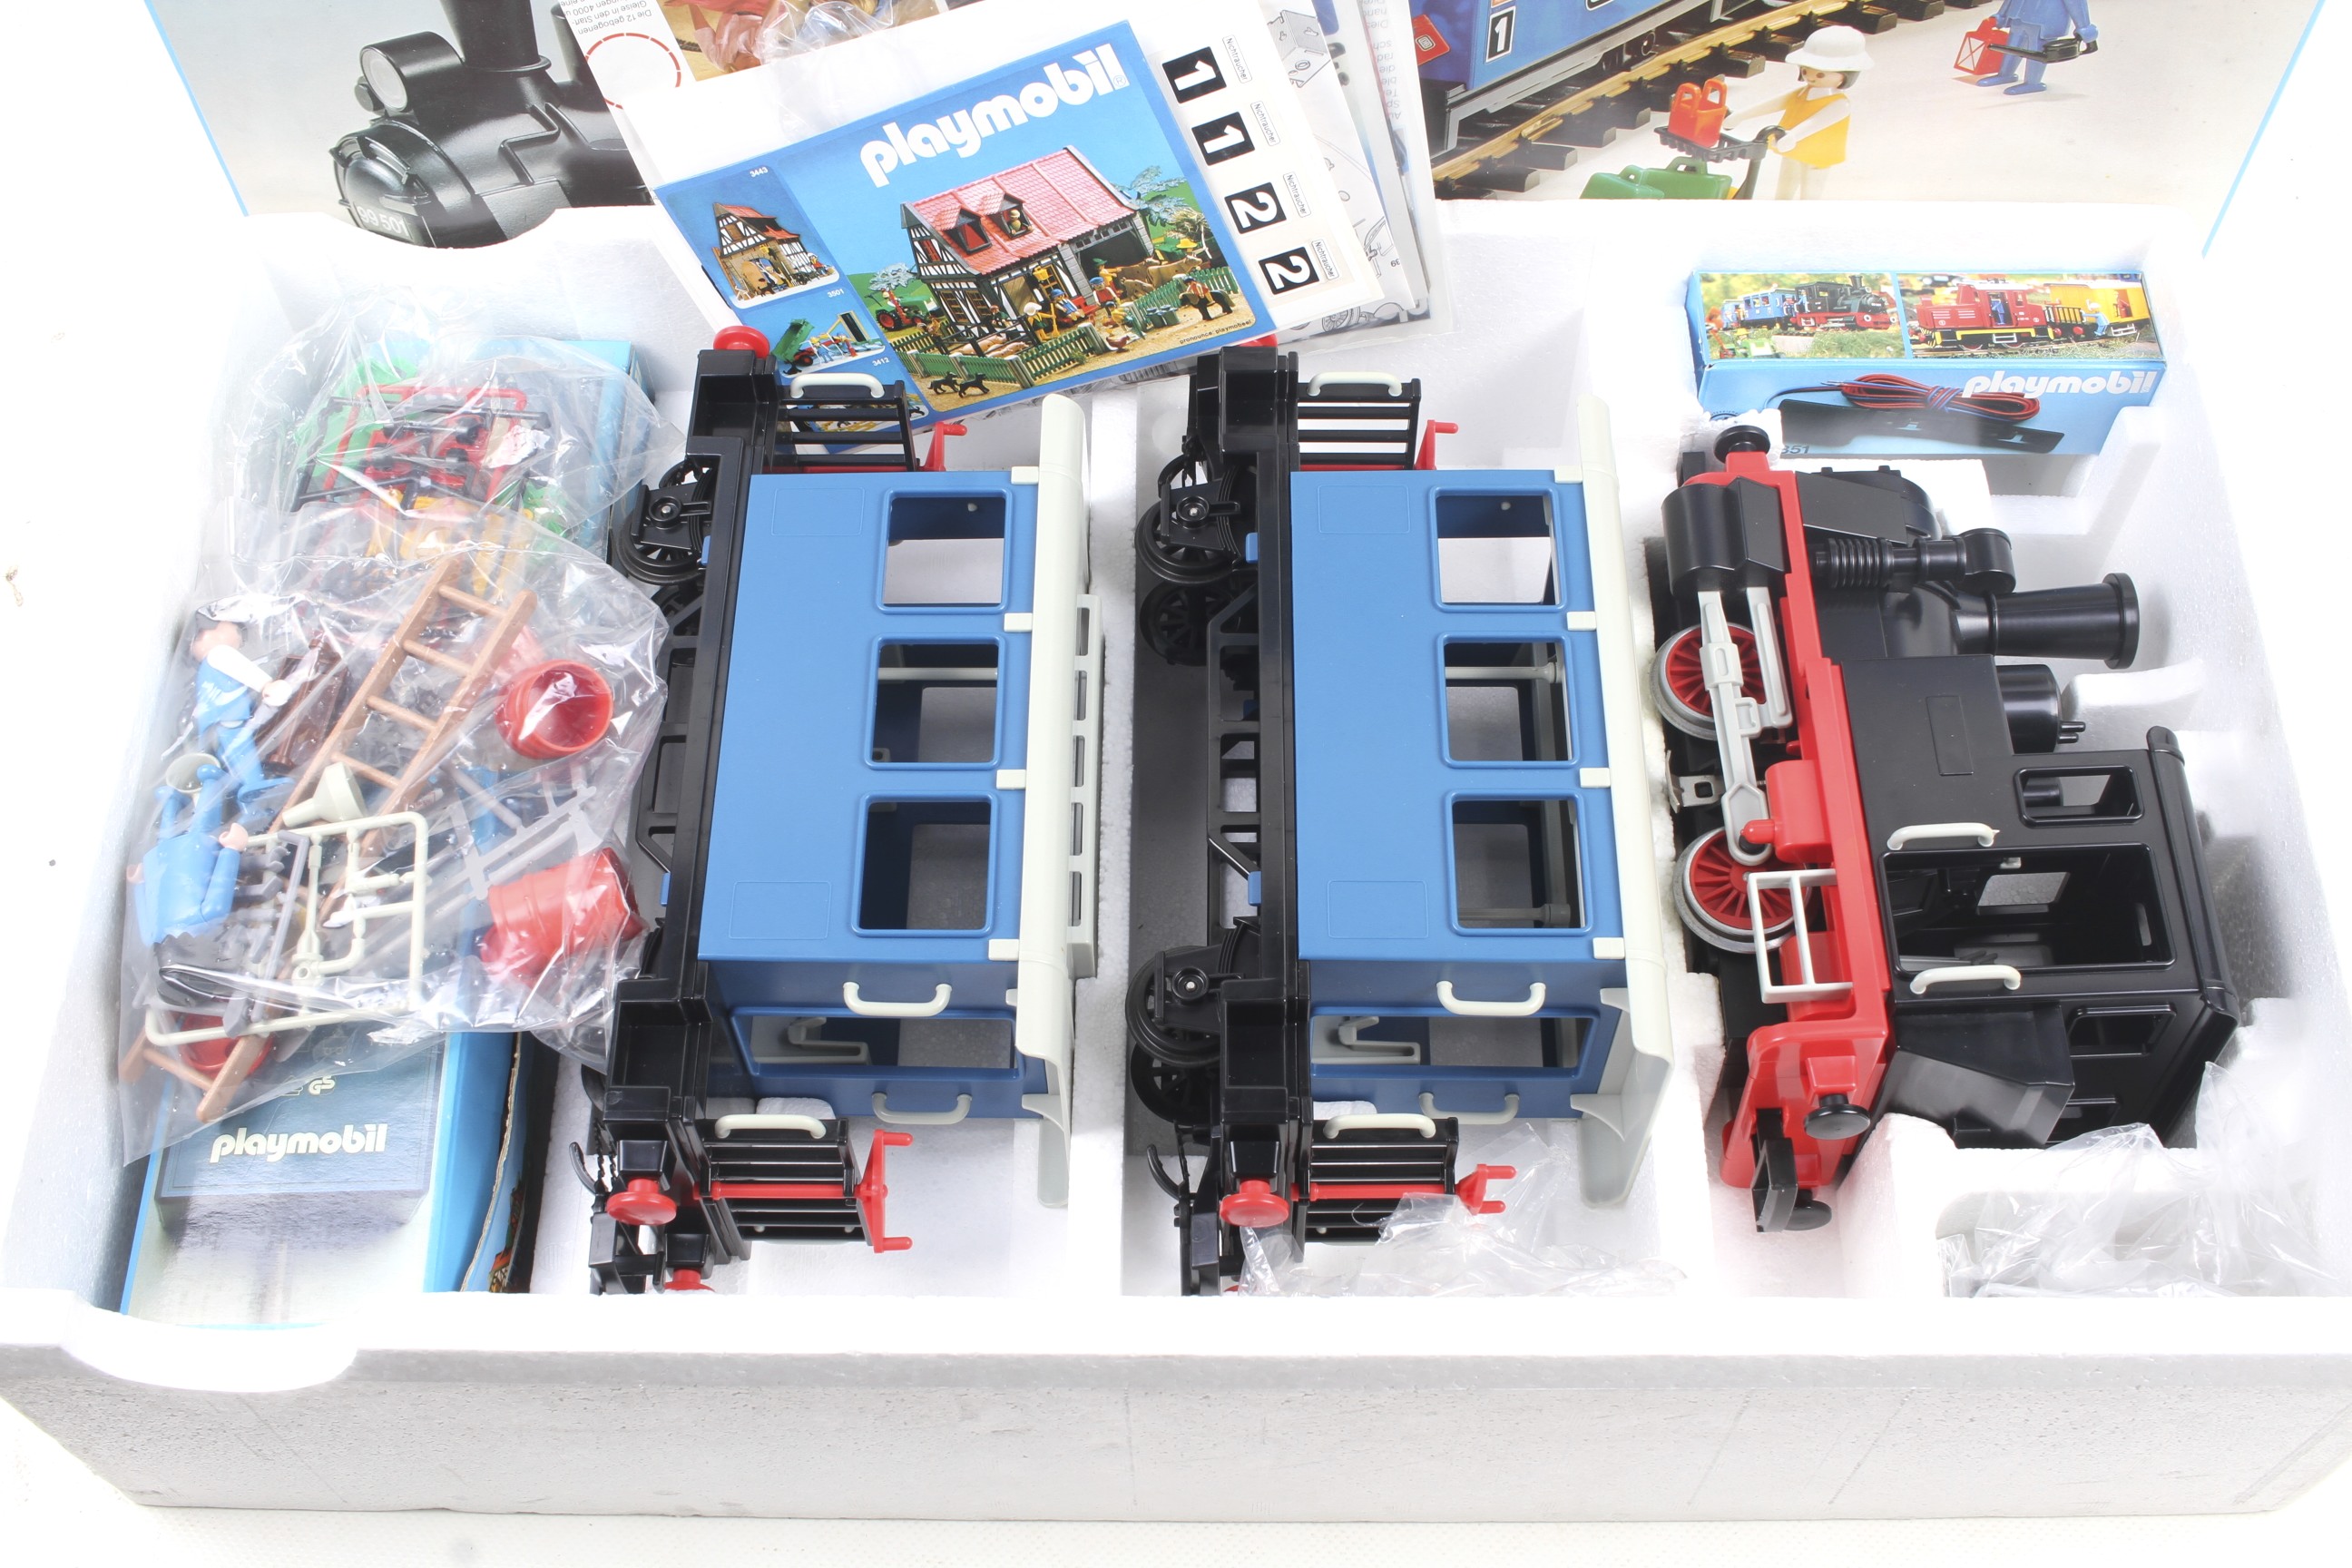 A Playmobil train set. - Image 2 of 2